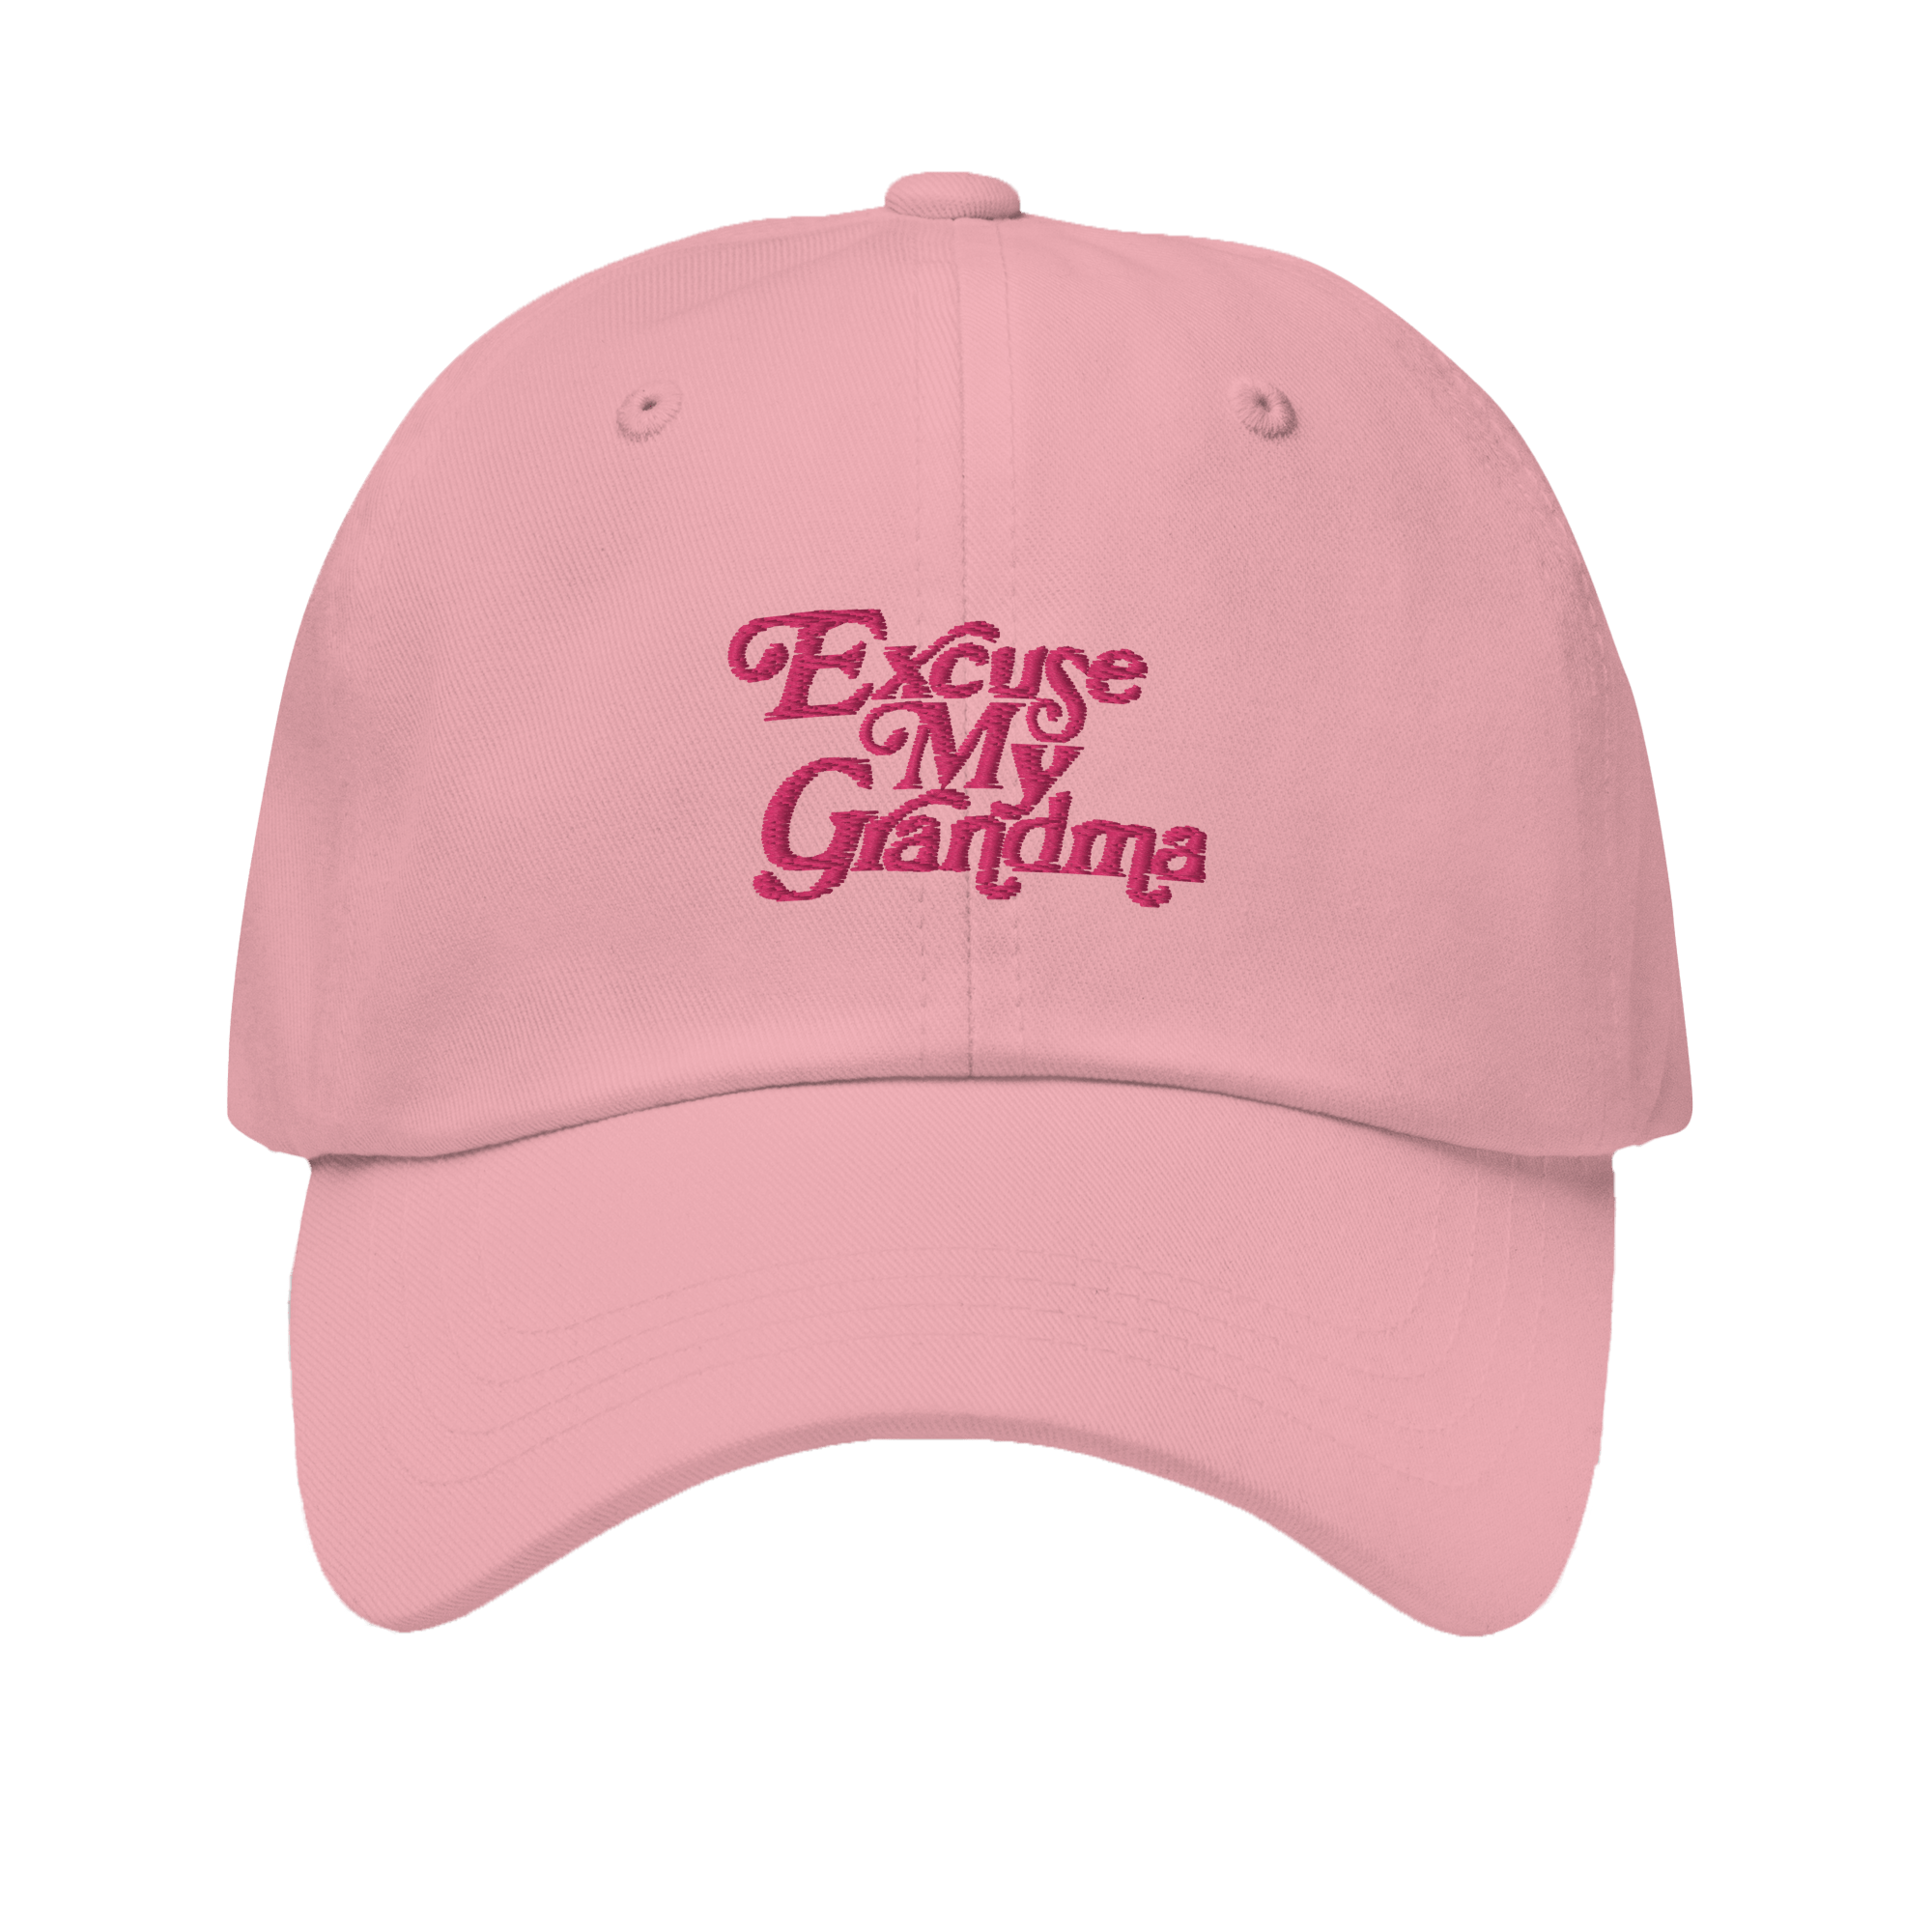 Signature Pink Dad Hat - Excuse My Grandma